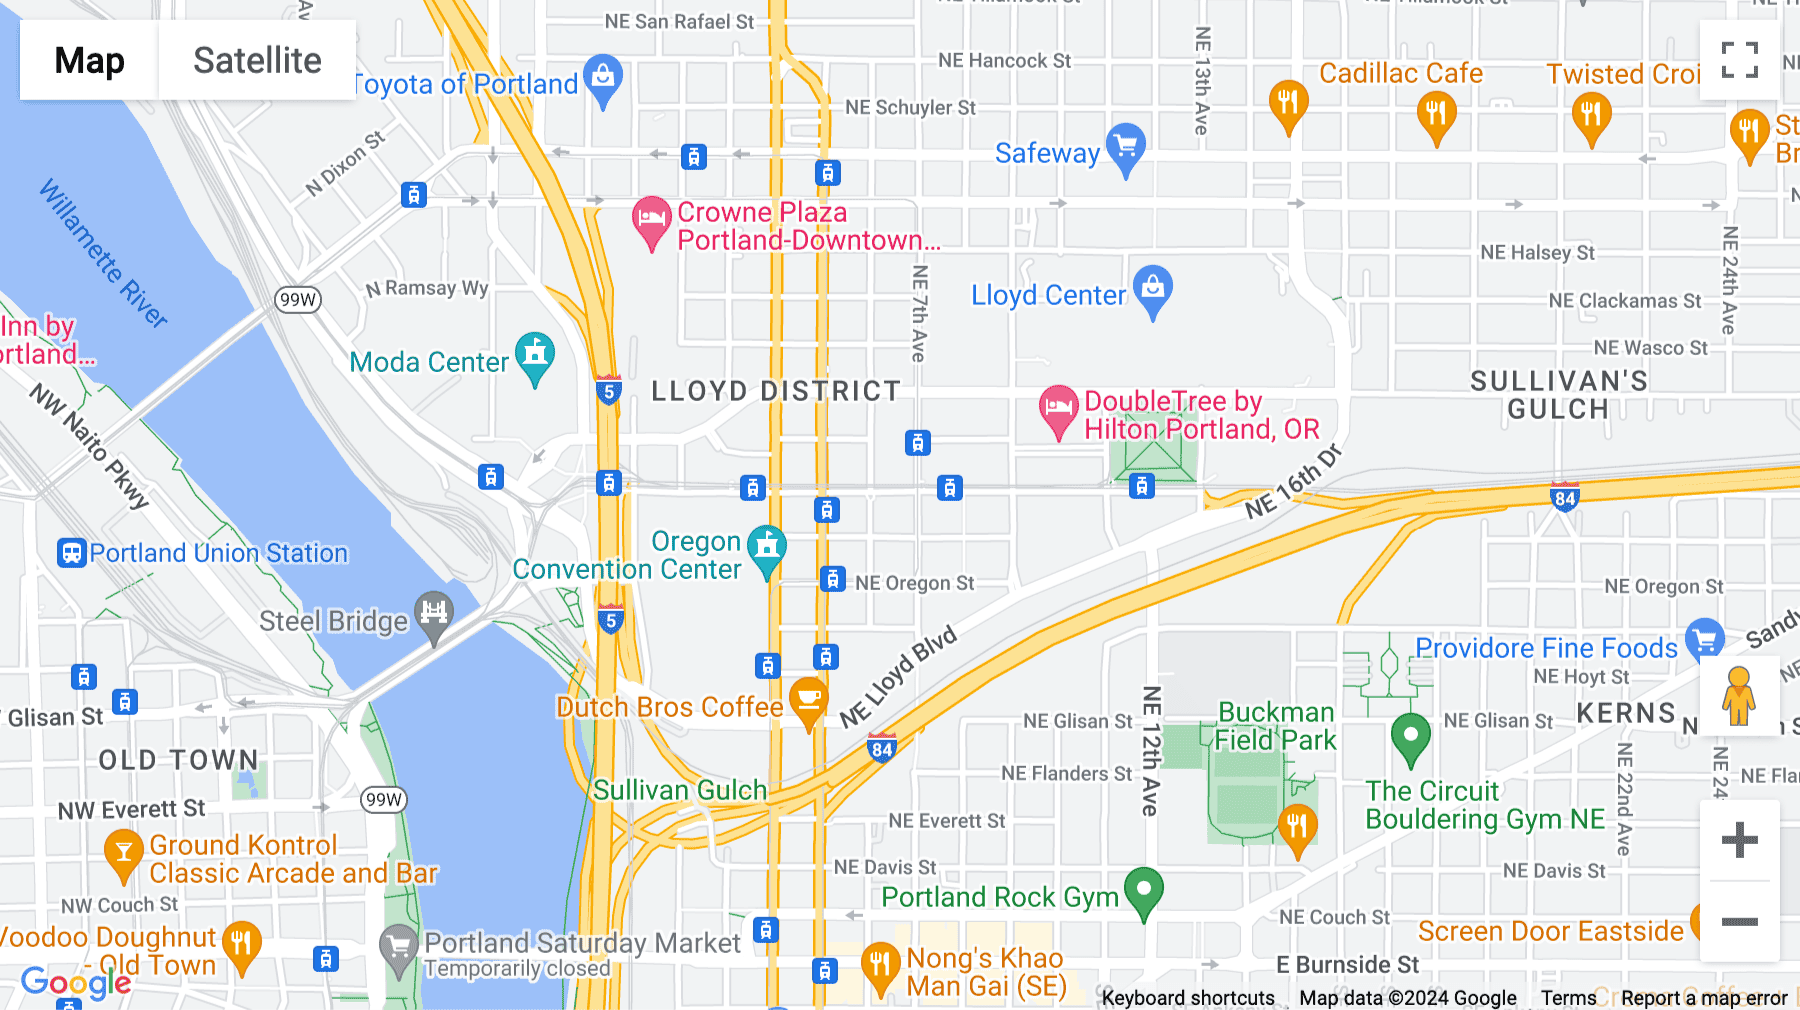 Click for interative map of 650 N. E. Holladay Street, Suite 1600, Portland, Oregon, USA, Portland